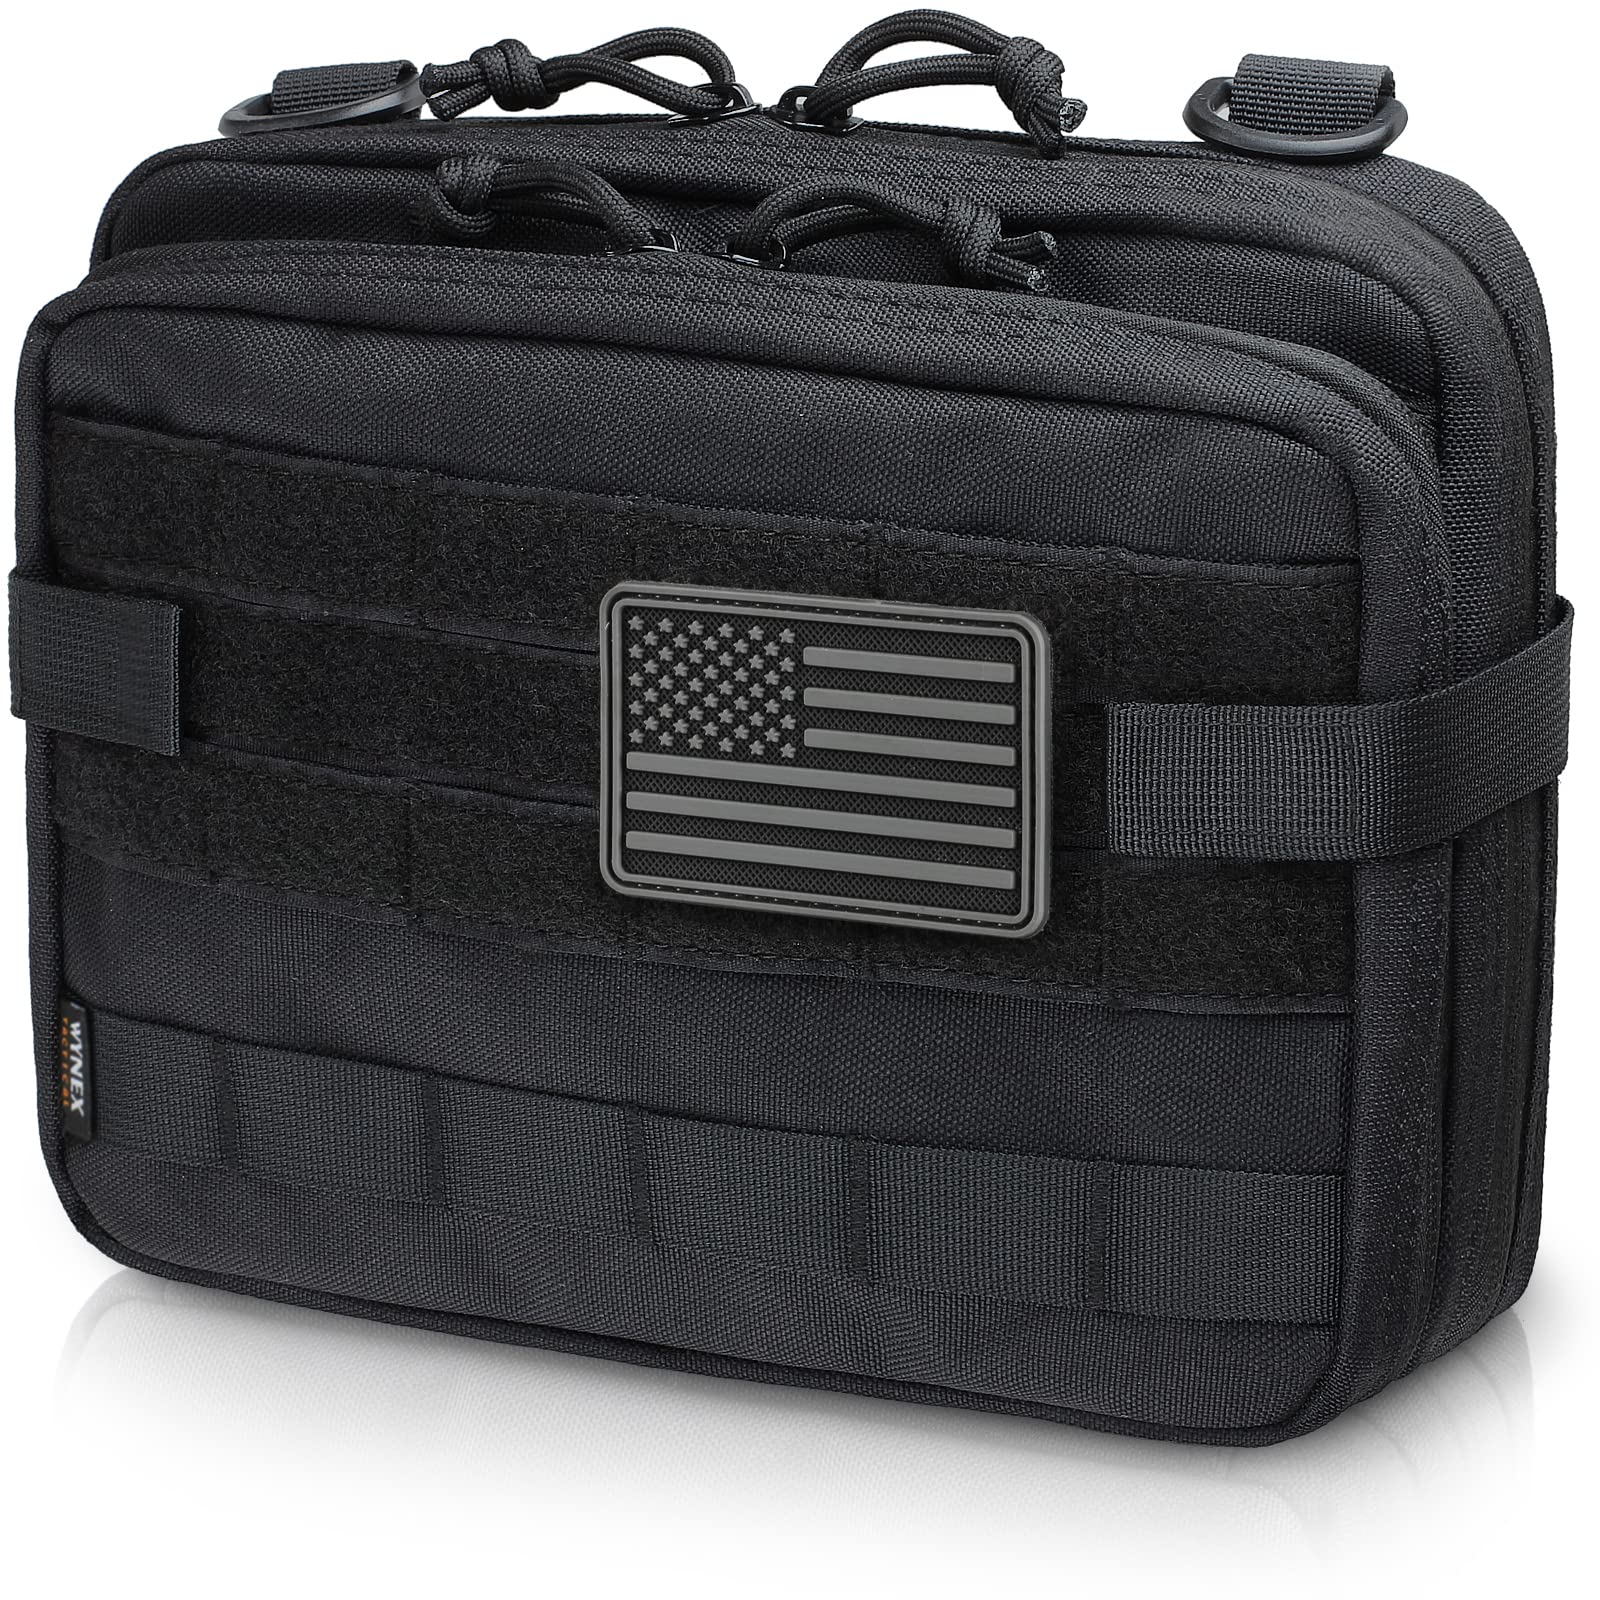  WYNEX Tactical Chest Rig Bag of Laser Cut Design